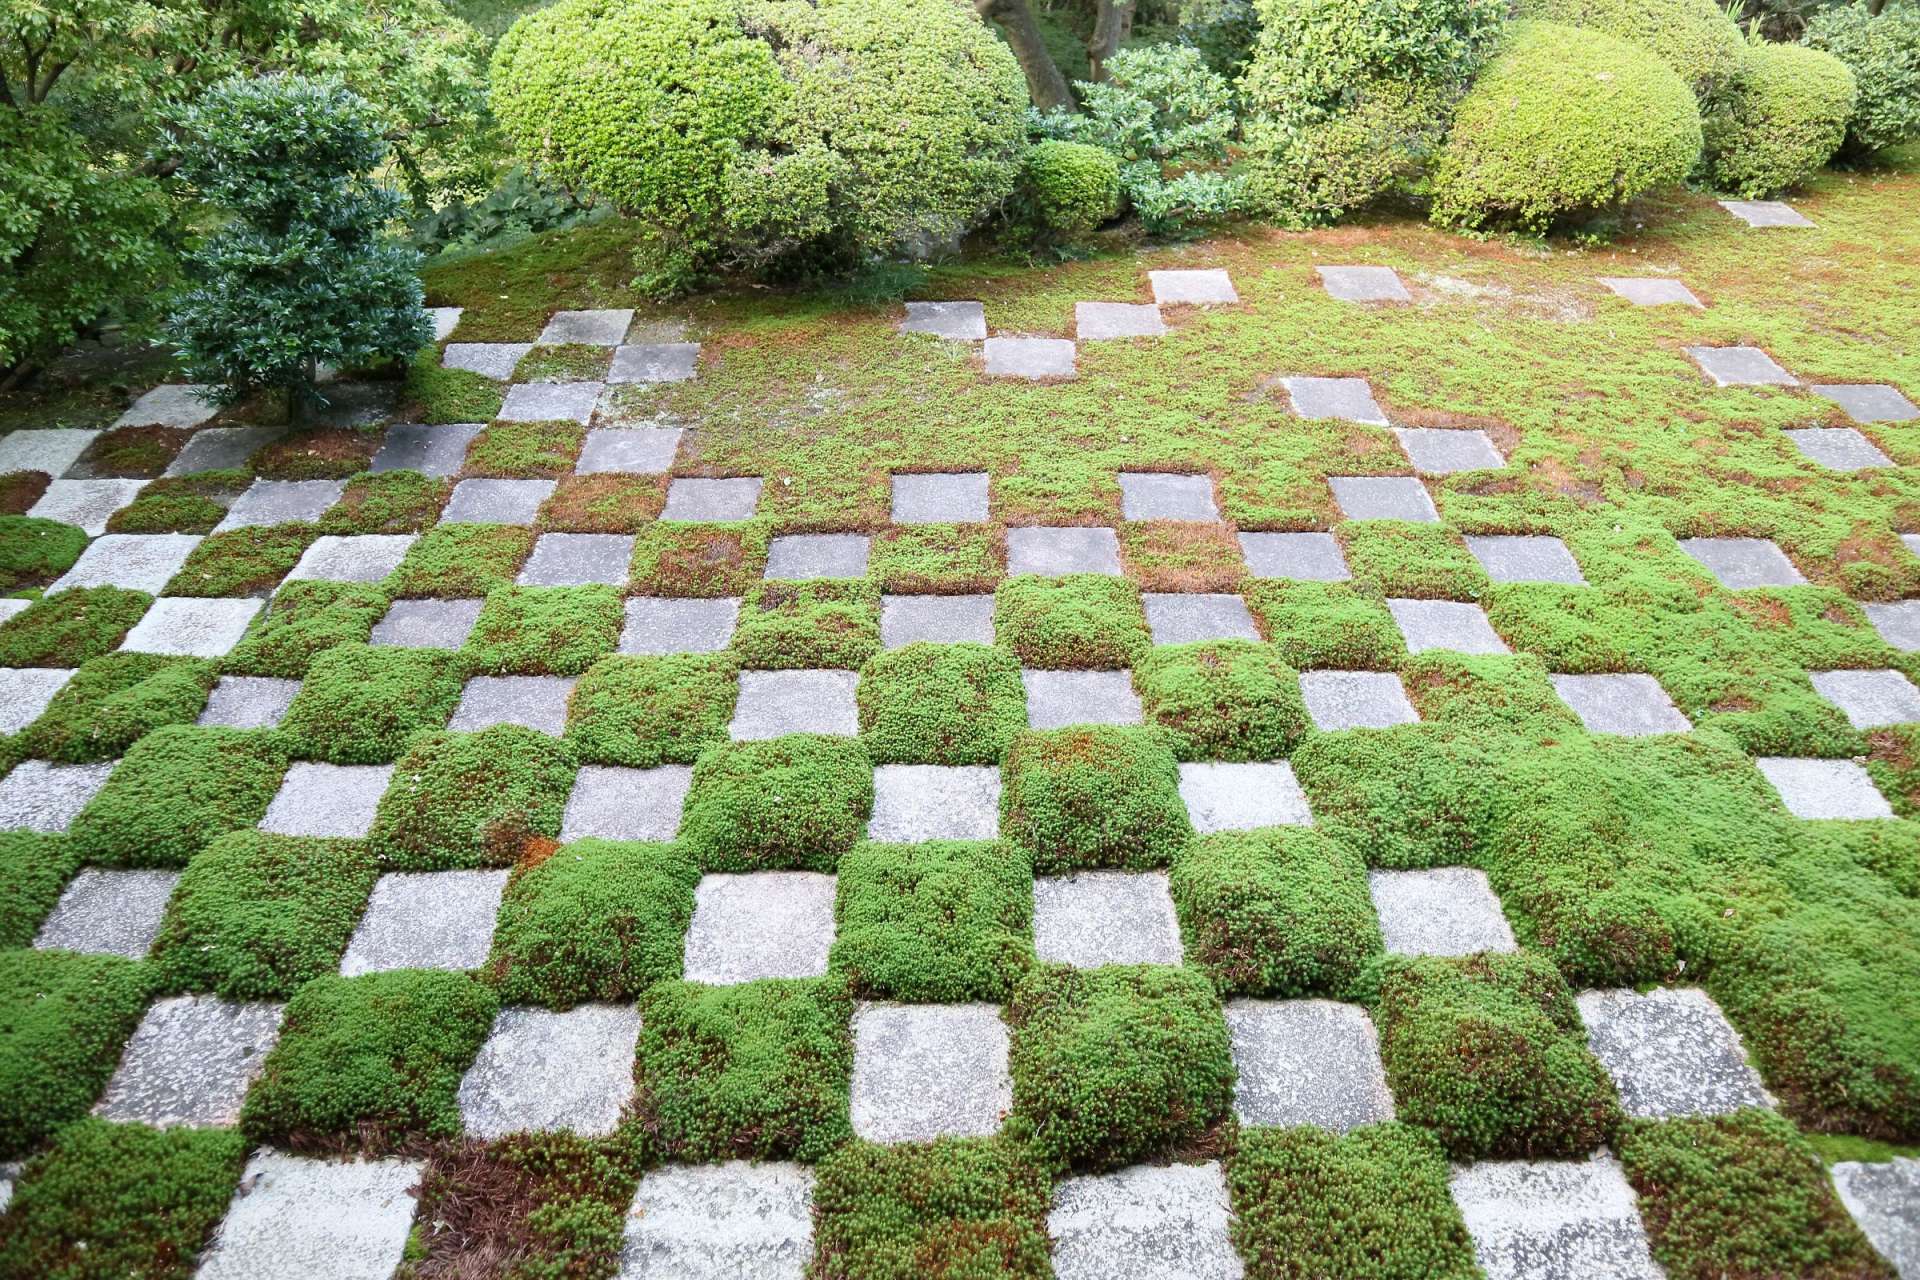 東福寺方丈庭園「八相の庭」の「西庭」。石と苔の市松模様が印象的
写真提供：重森千靑
